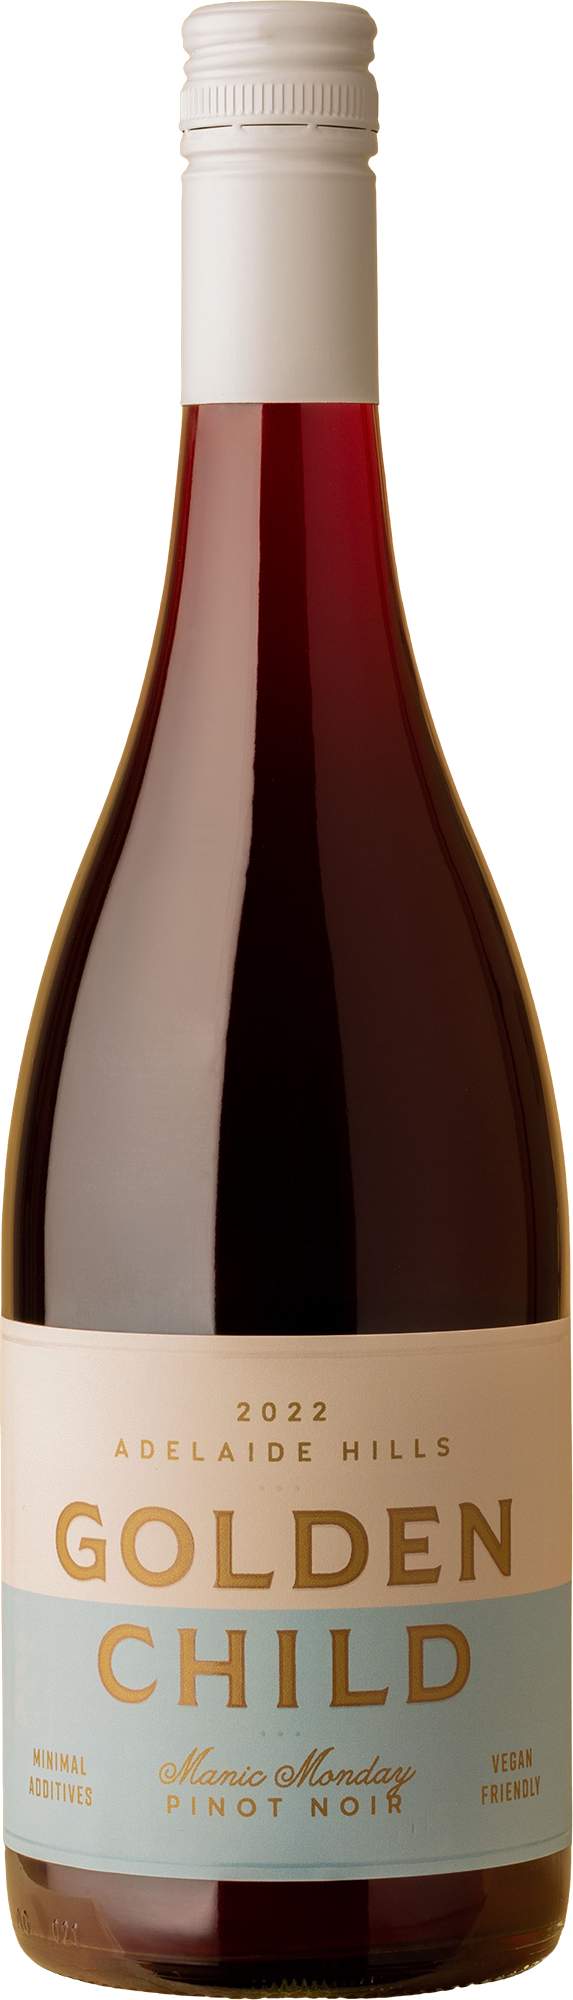 Golden Child - Manic Monday Pinot Noir 2022 Red Wine